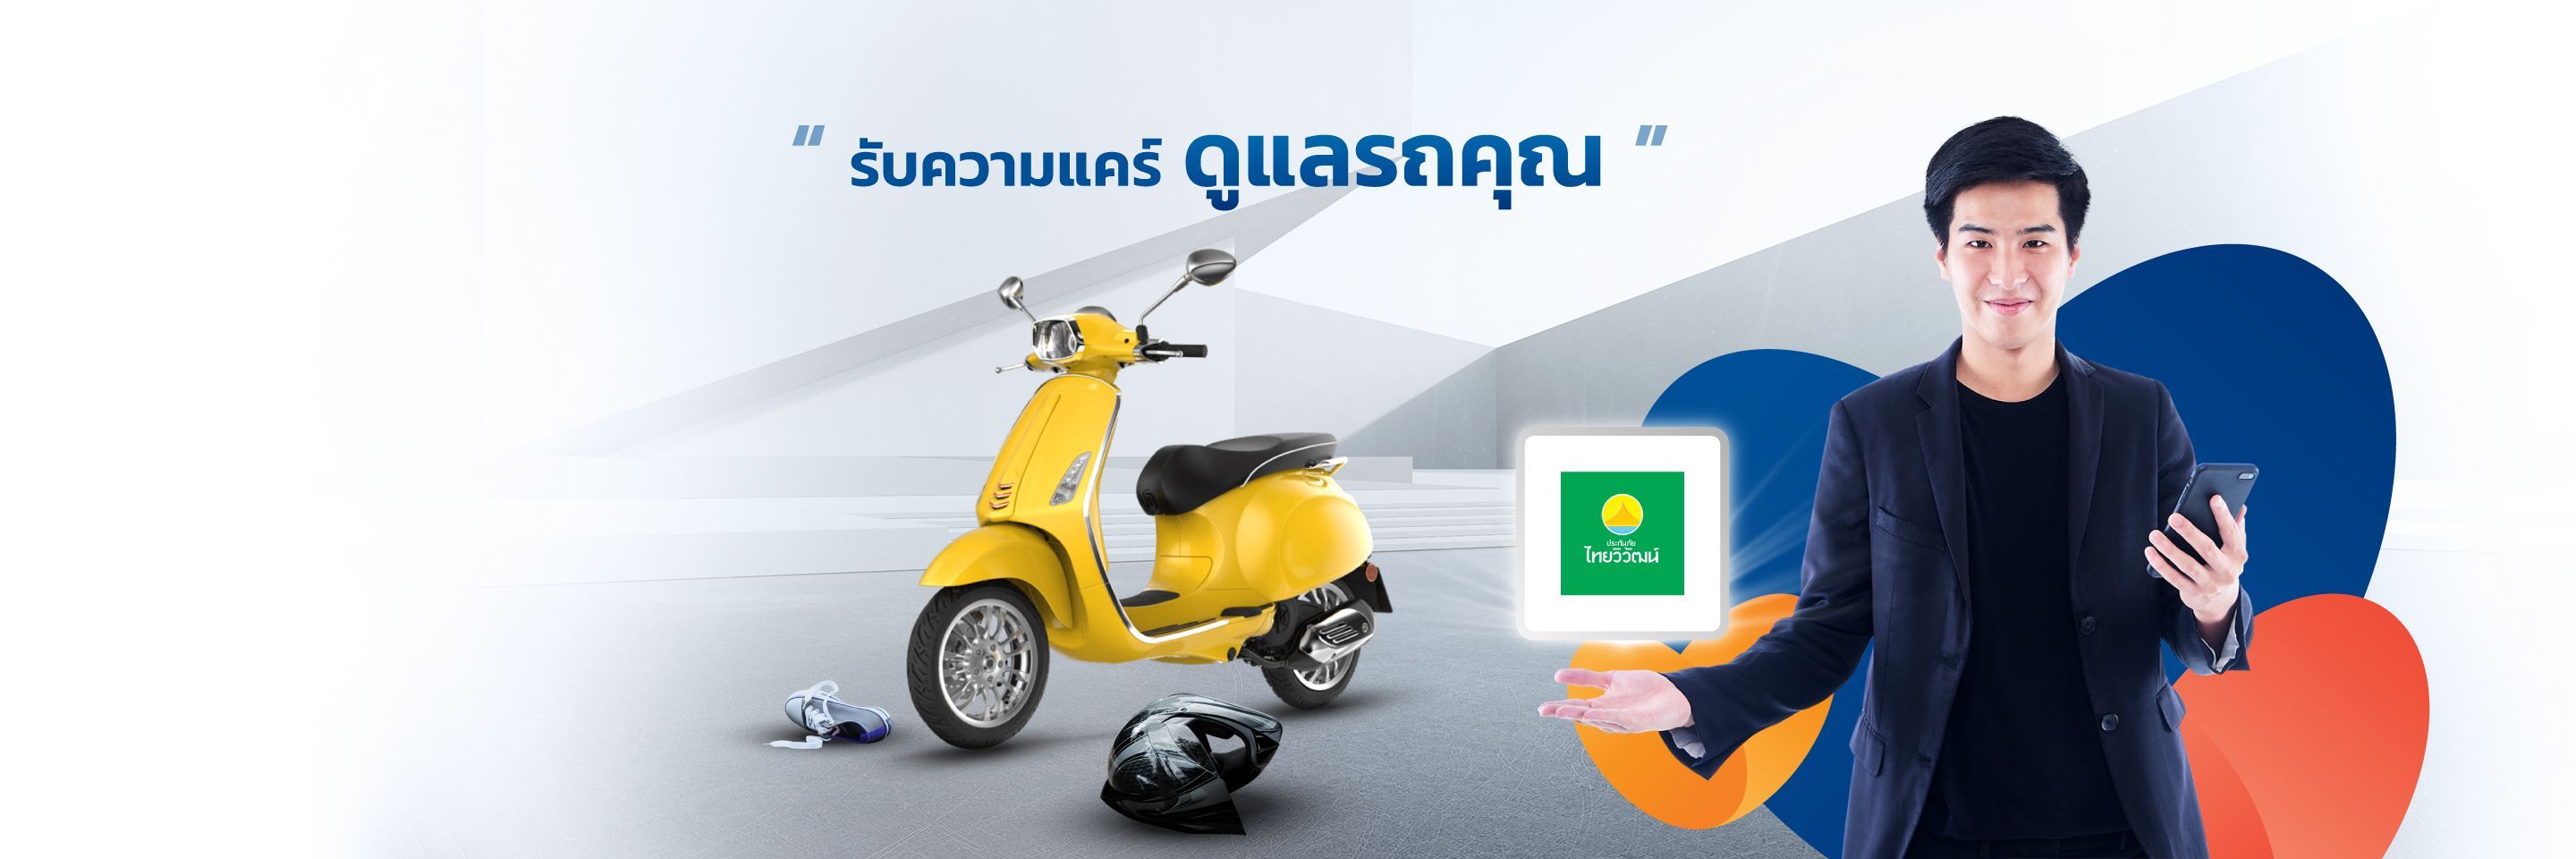 Motorbike Suppliers_Slider_Top banner Thaivivat.jpg